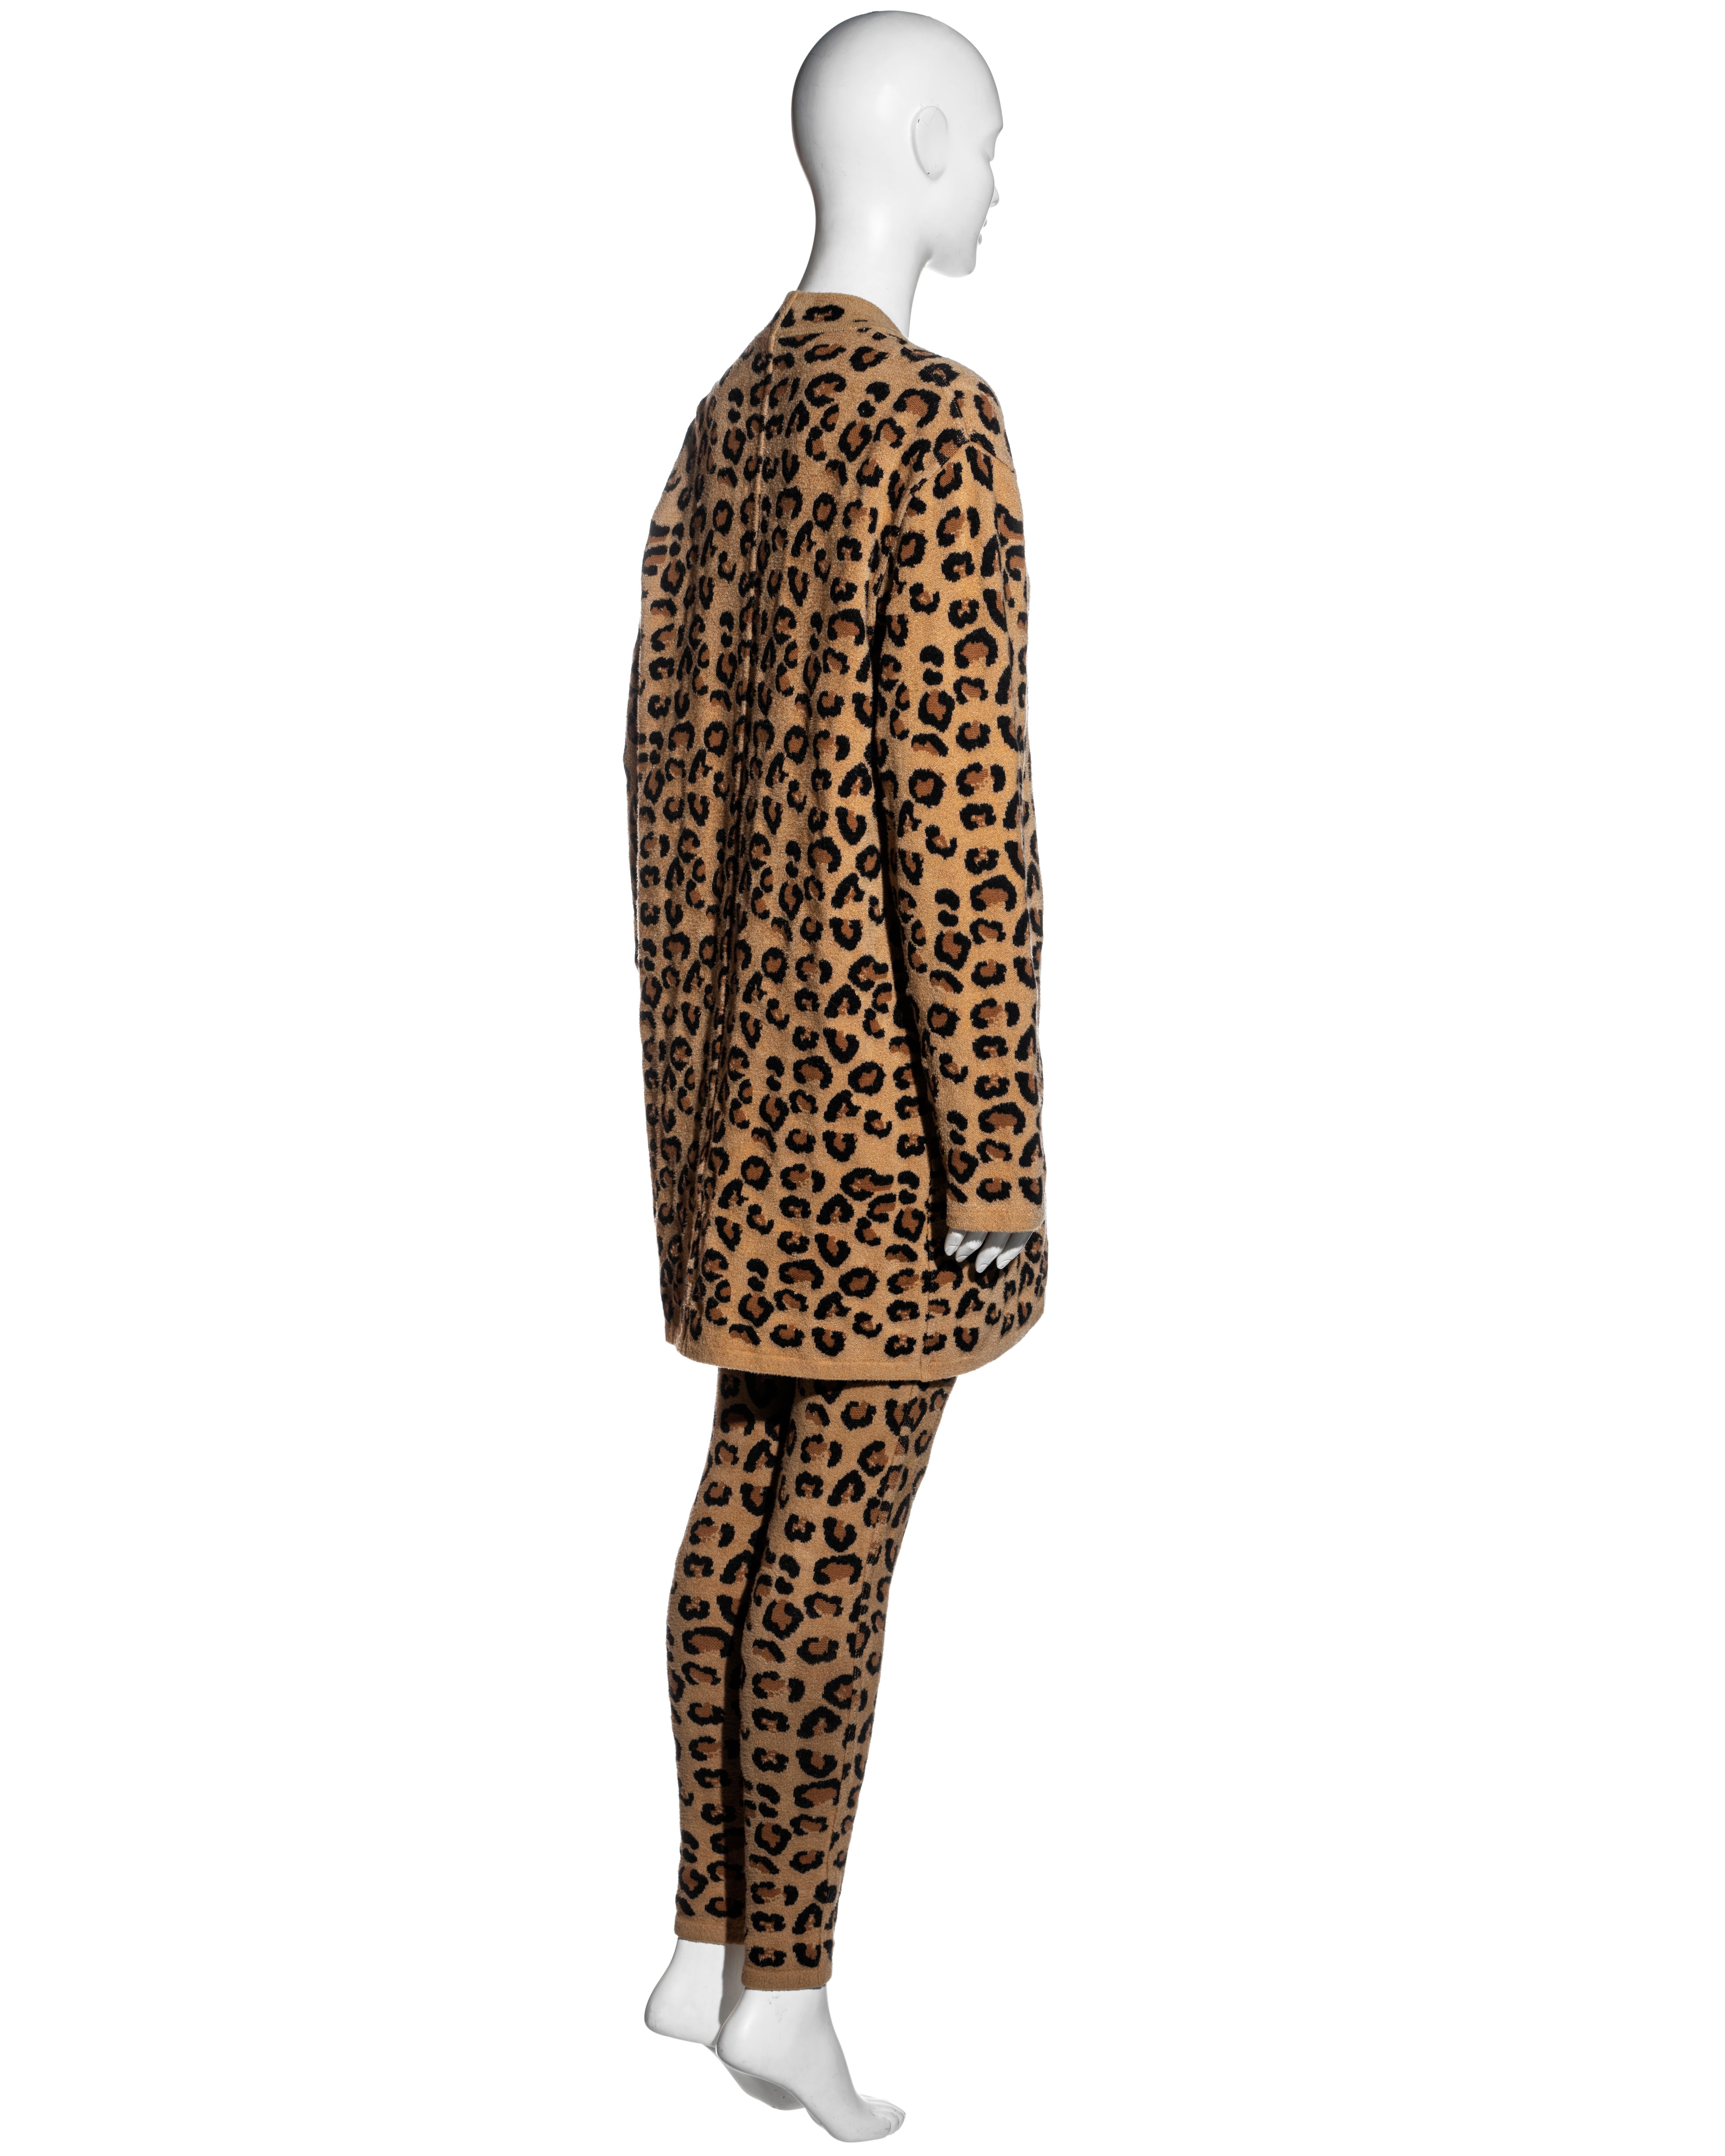 Azzedine Alaia leopard wool dress, cardigan, skirt and leggings set, fw 1991 For Sale 8